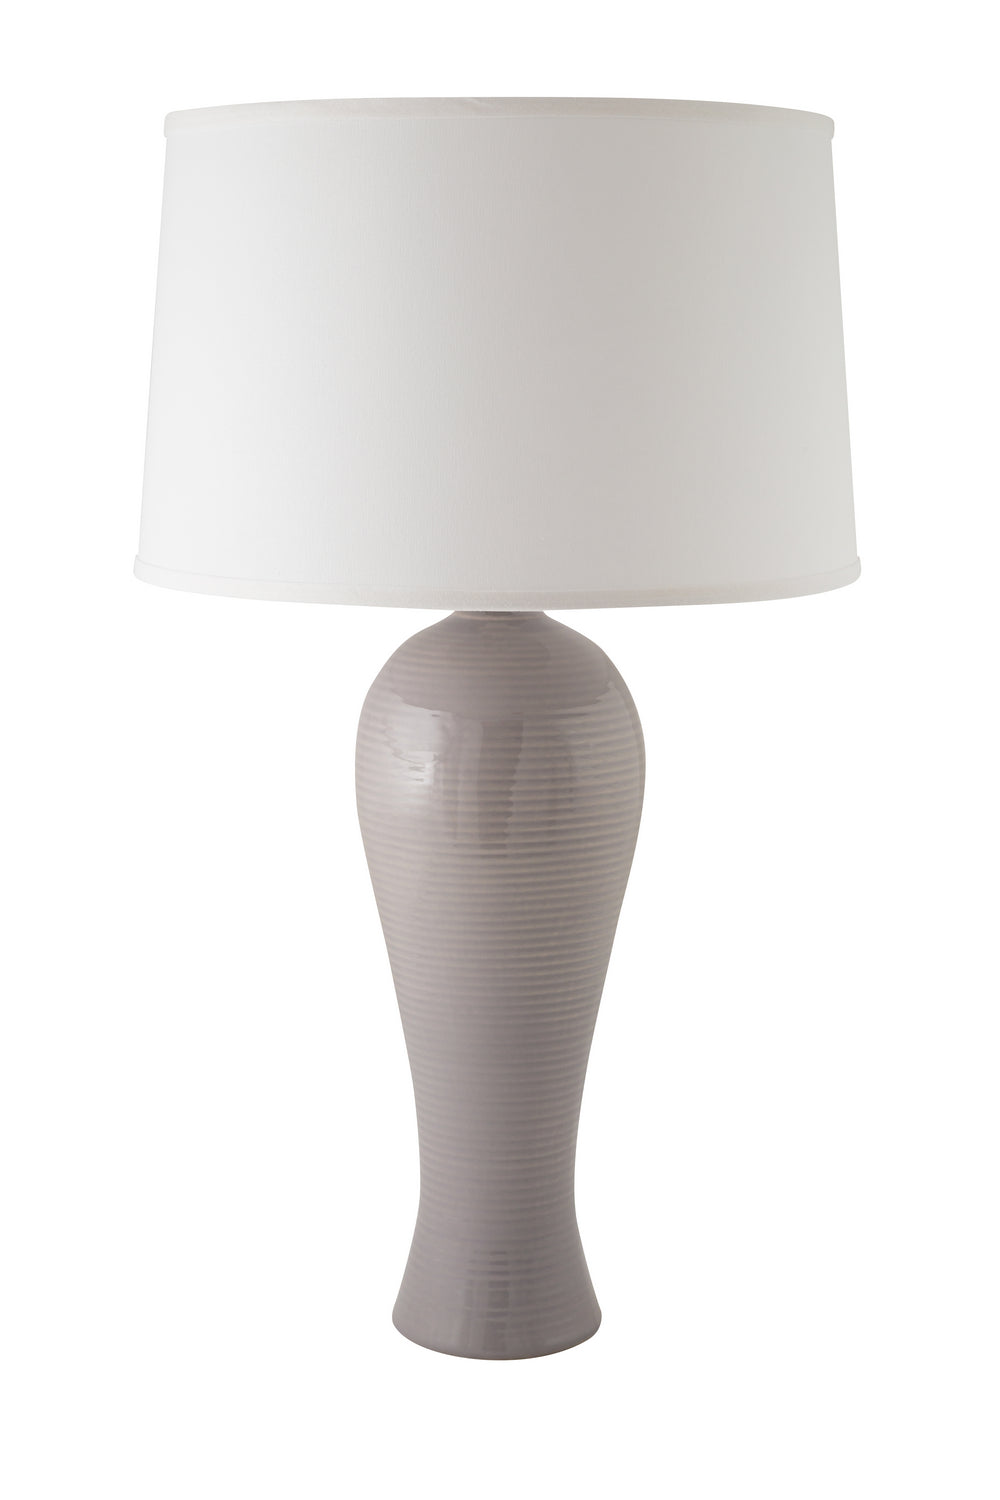 River Ceramic Lighting 026-10 Potters Mark One Light Table Lamp Lamp Gray